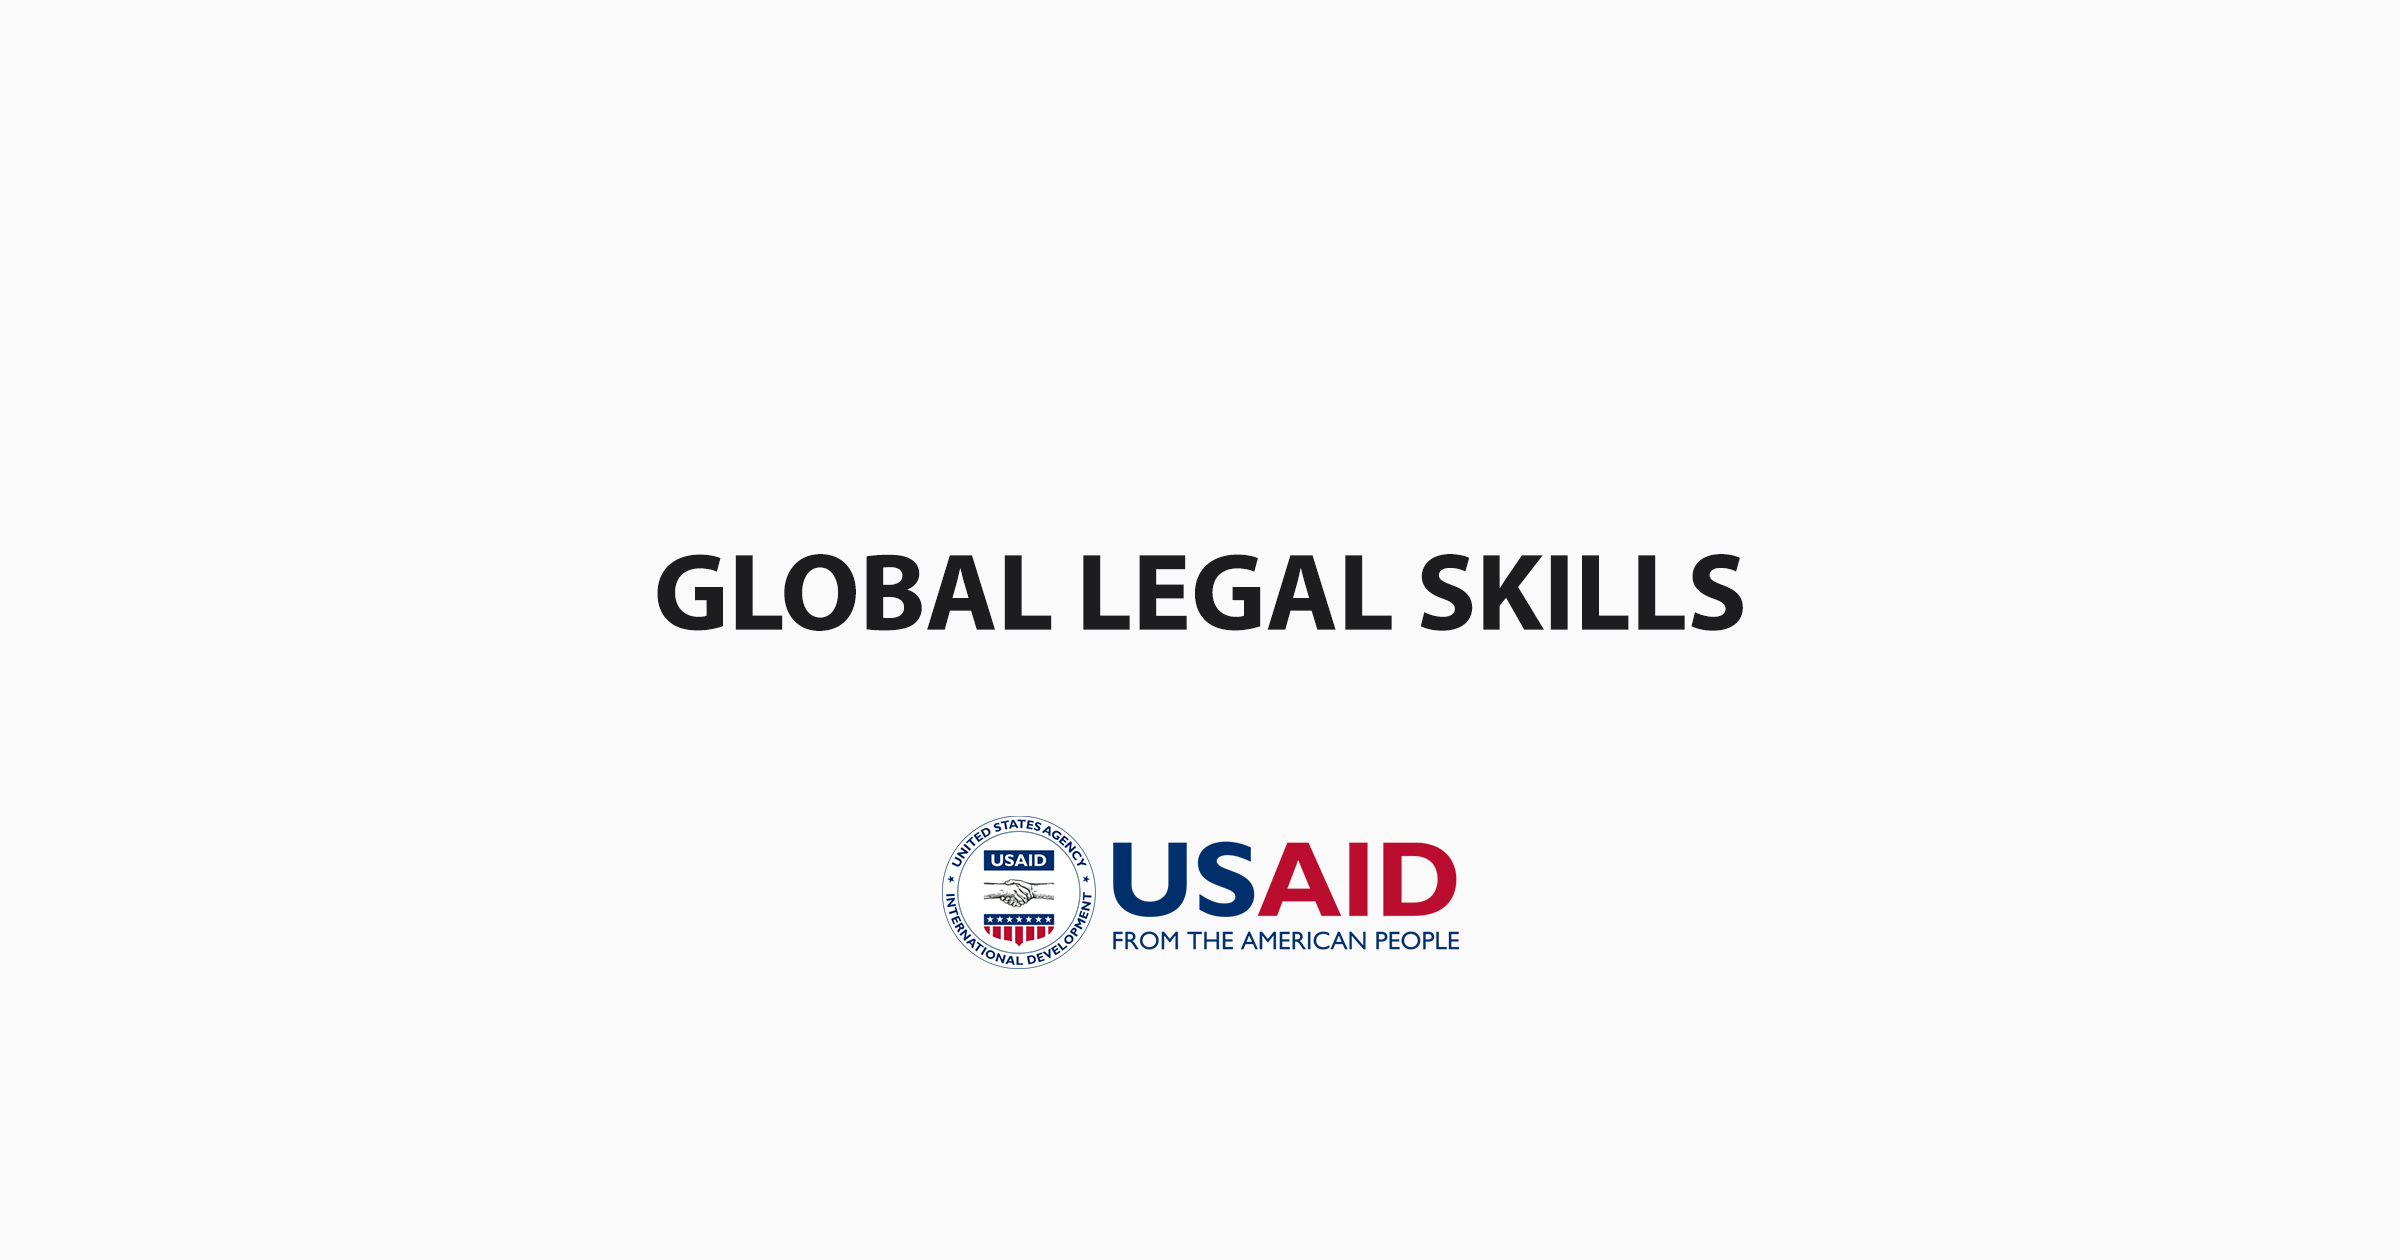 Global Legal Skills form USAID